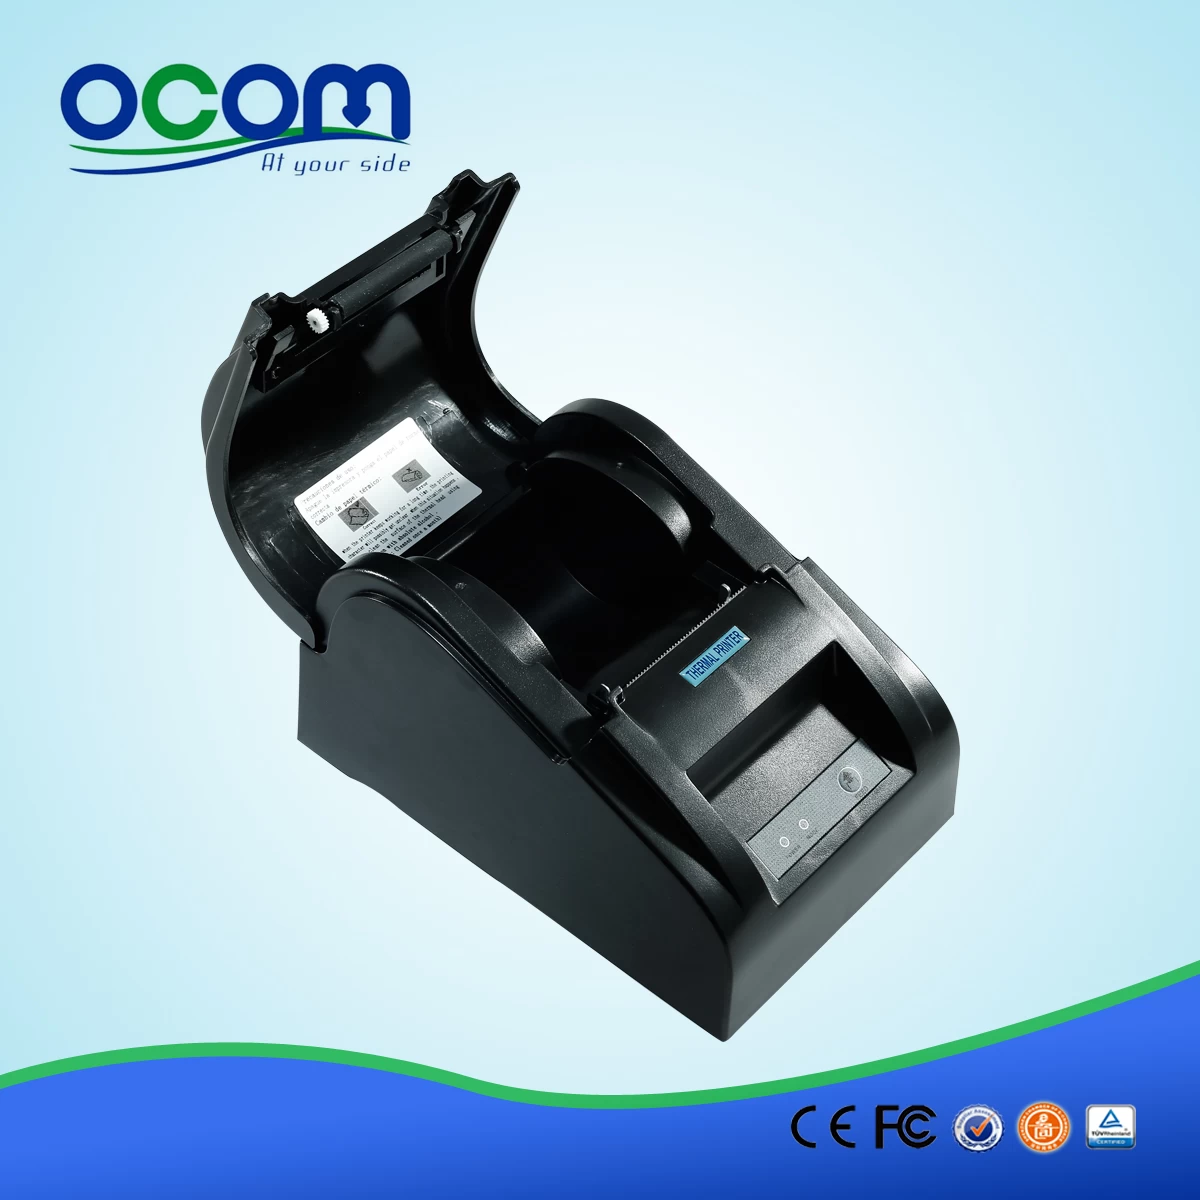 OCPP-585 Thermal receipt pos printer